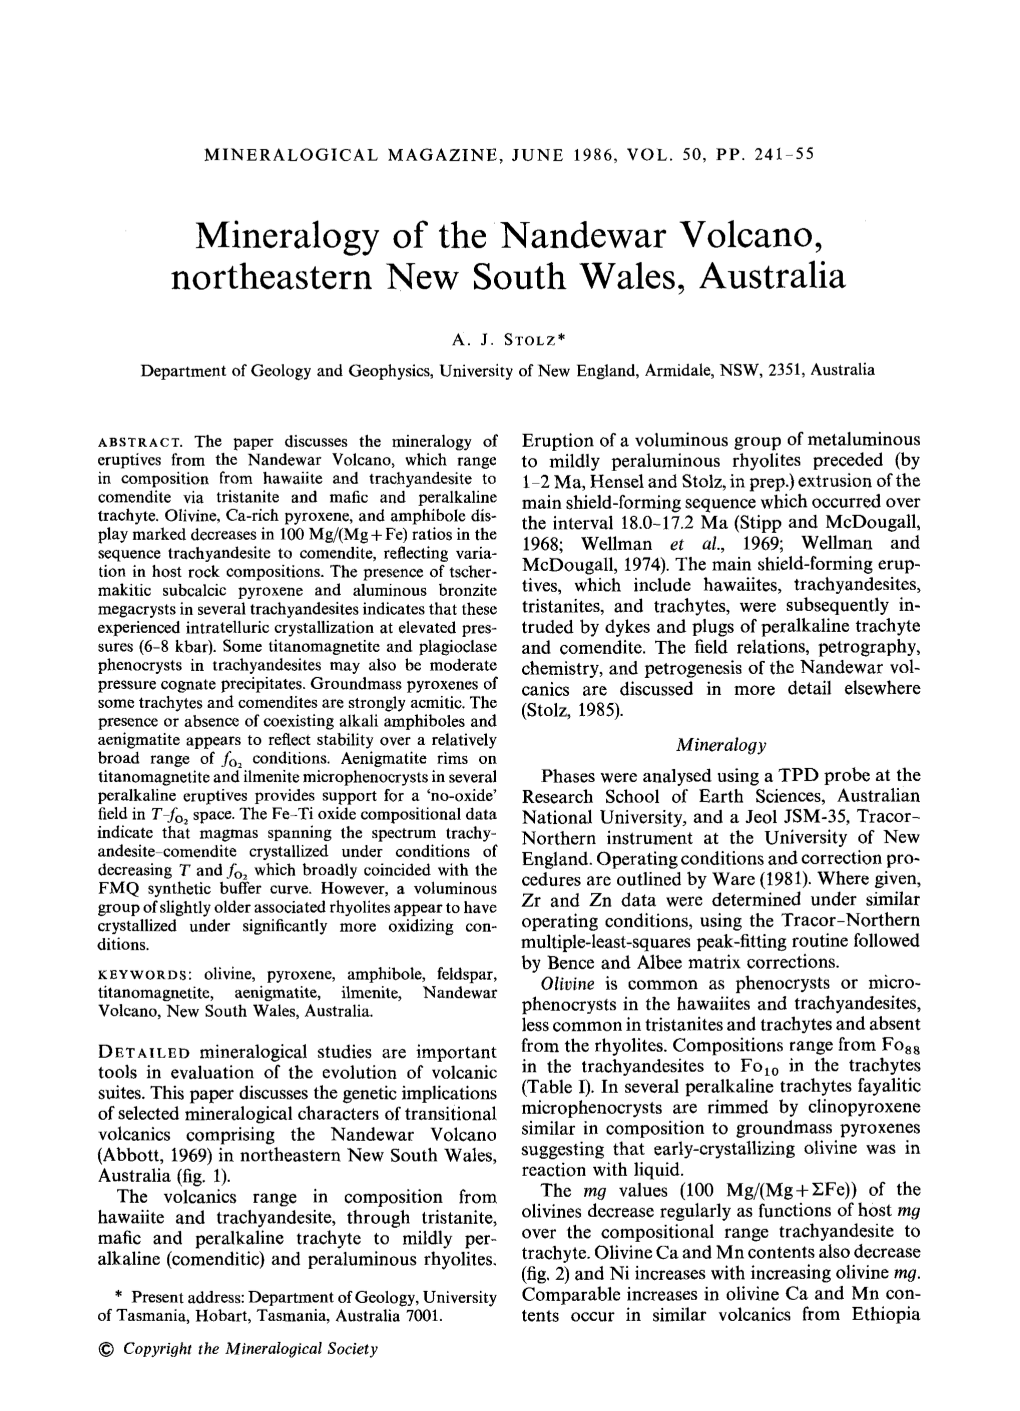 Mineralogy of the Nandewar Volcano, Northeastern New South Wales, Australia